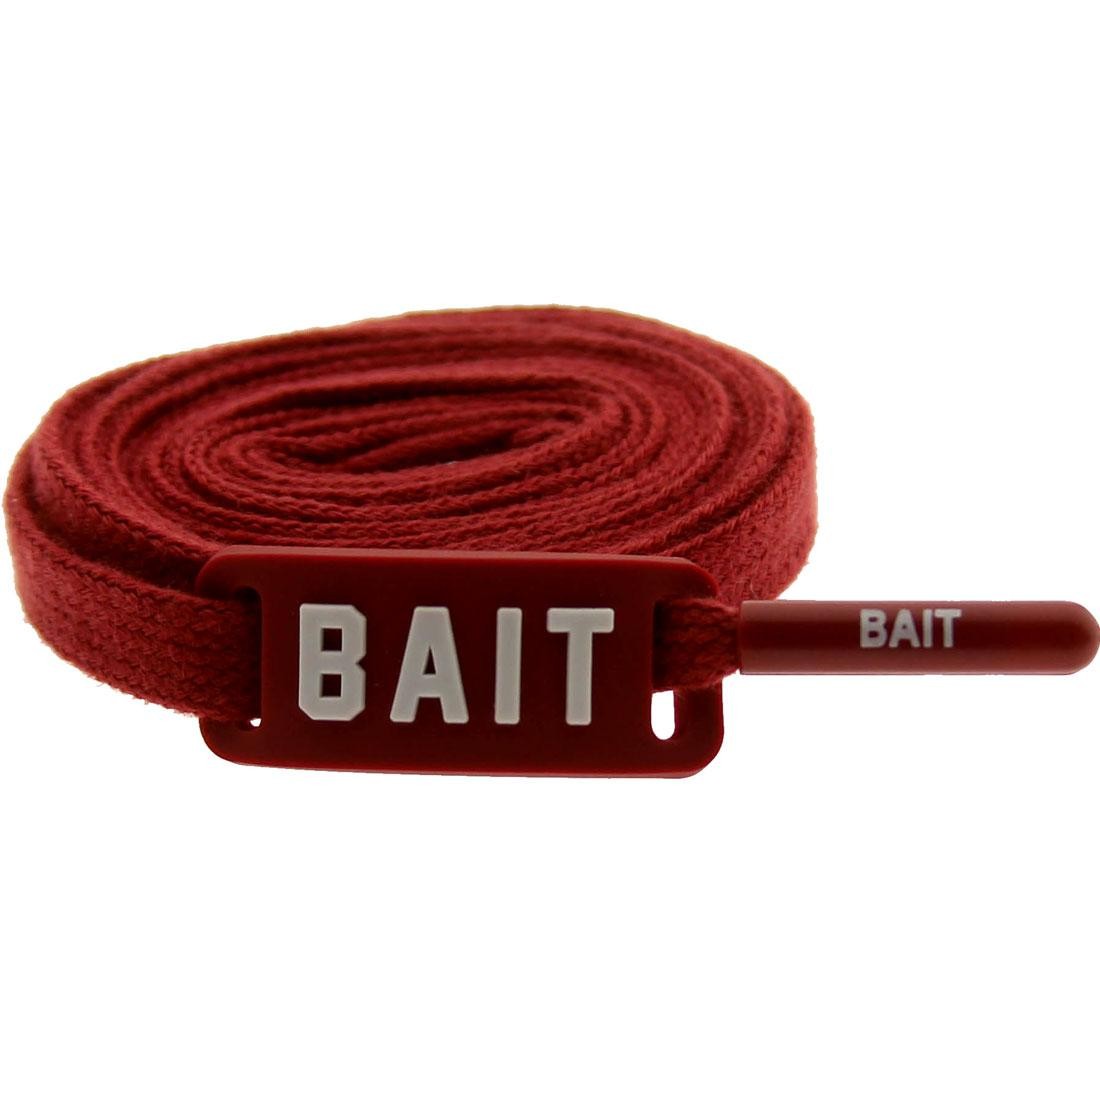 BAIT Flat Shoelaces (red)